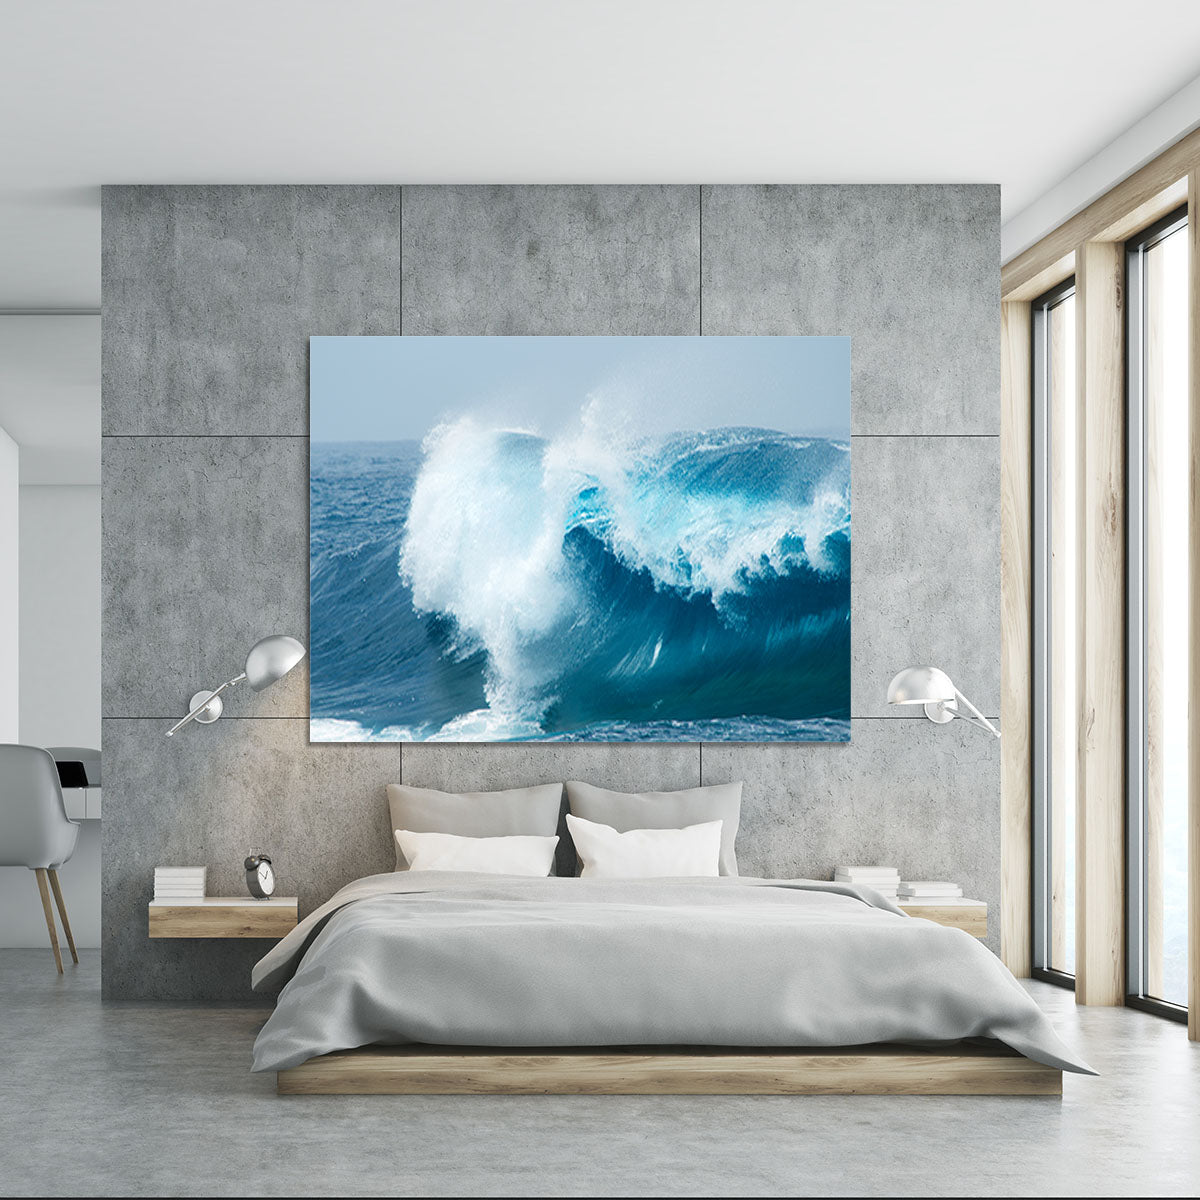 Ocean waves breaking natural Canvas Print or Poster - Canvas Art Rocks - 5